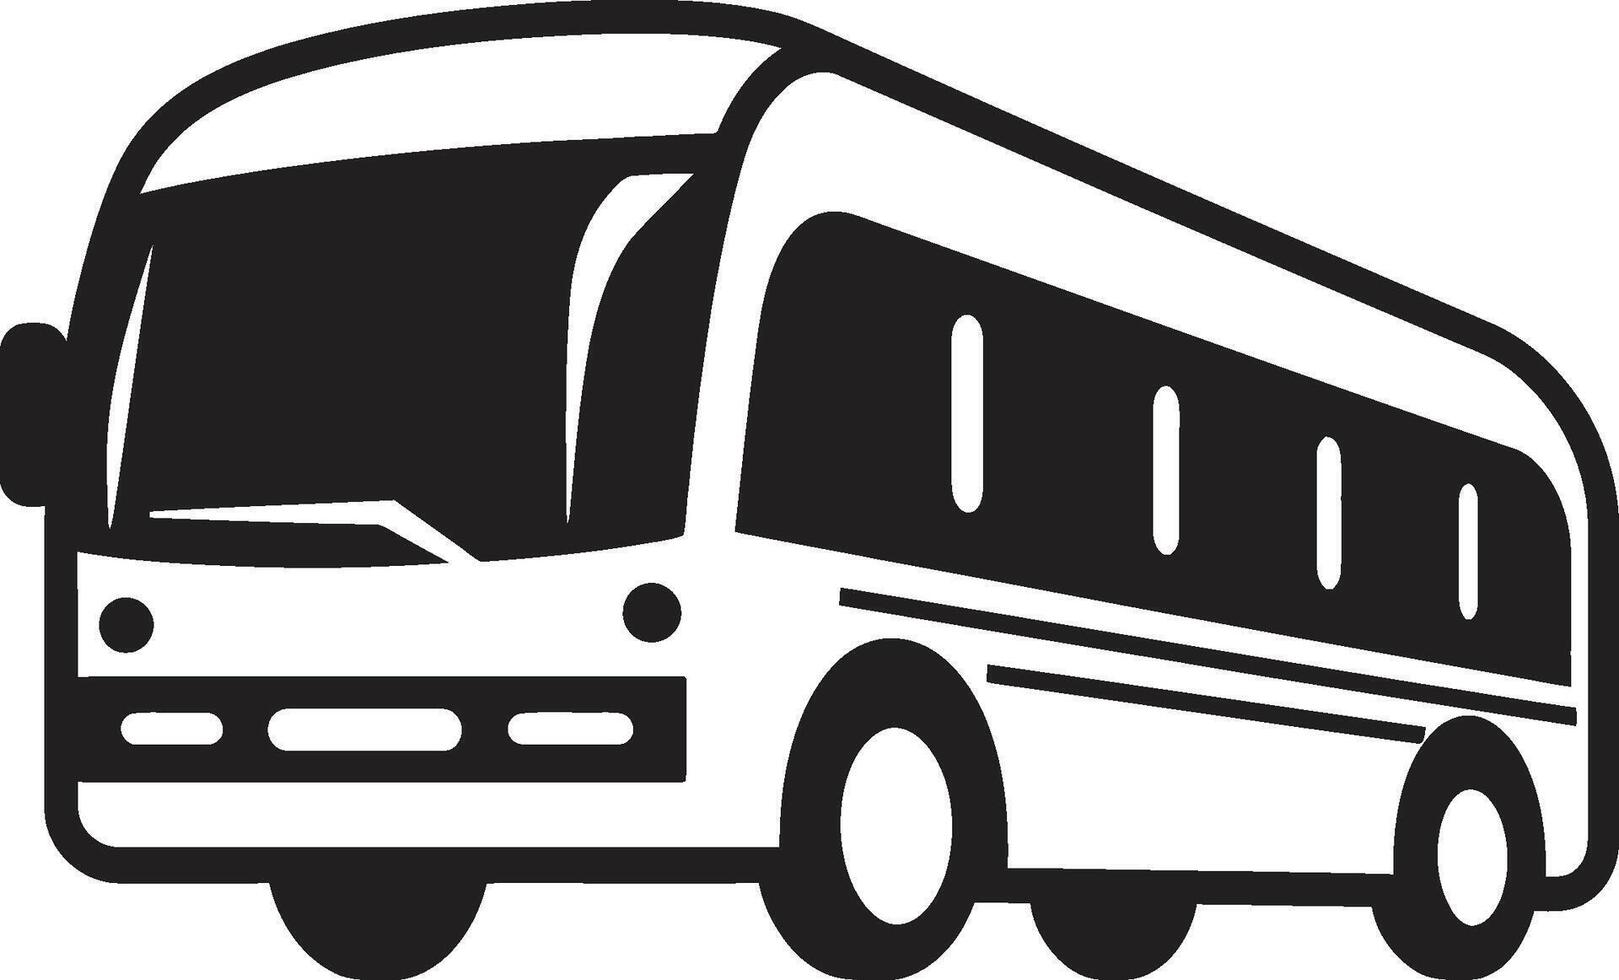 Sleek Bus Silhouette Black Logo Design Travel Symbol Bus Icon vector